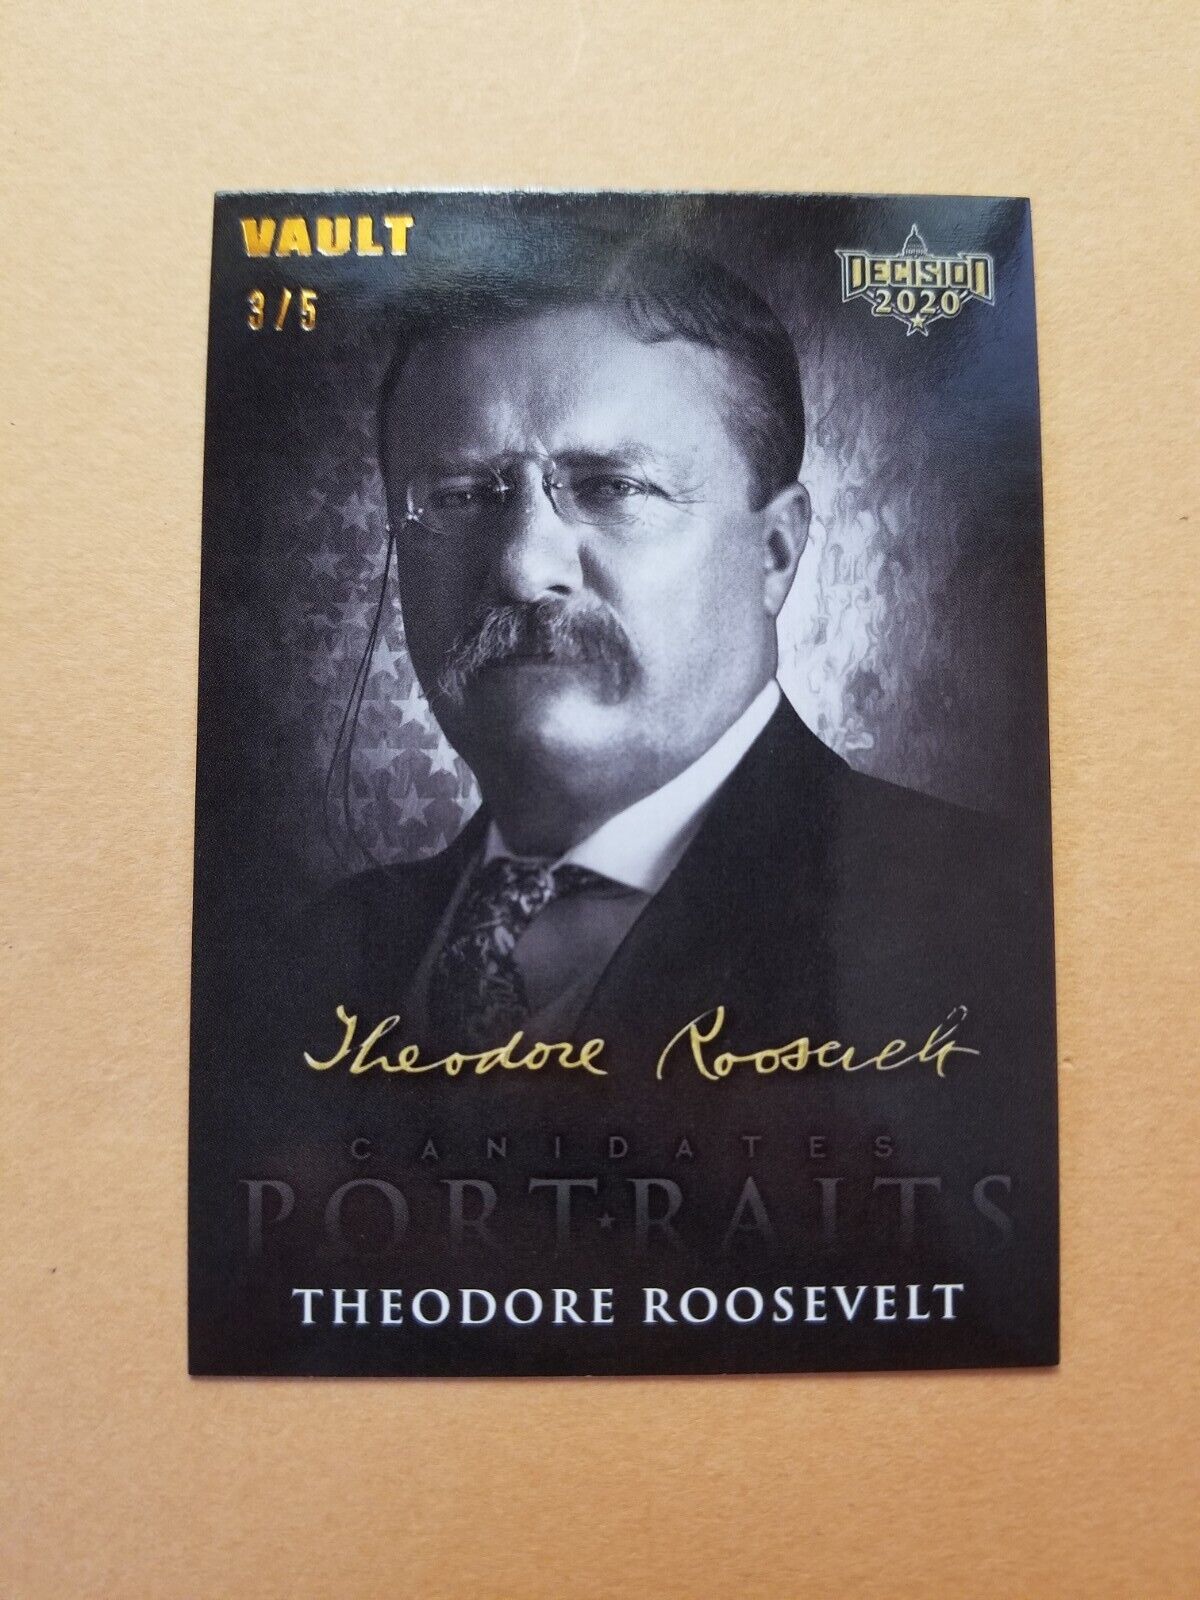 Theodore Roosevelt 2016 DECISION VAULT CANDIDATE PORTRAITS #3/5 